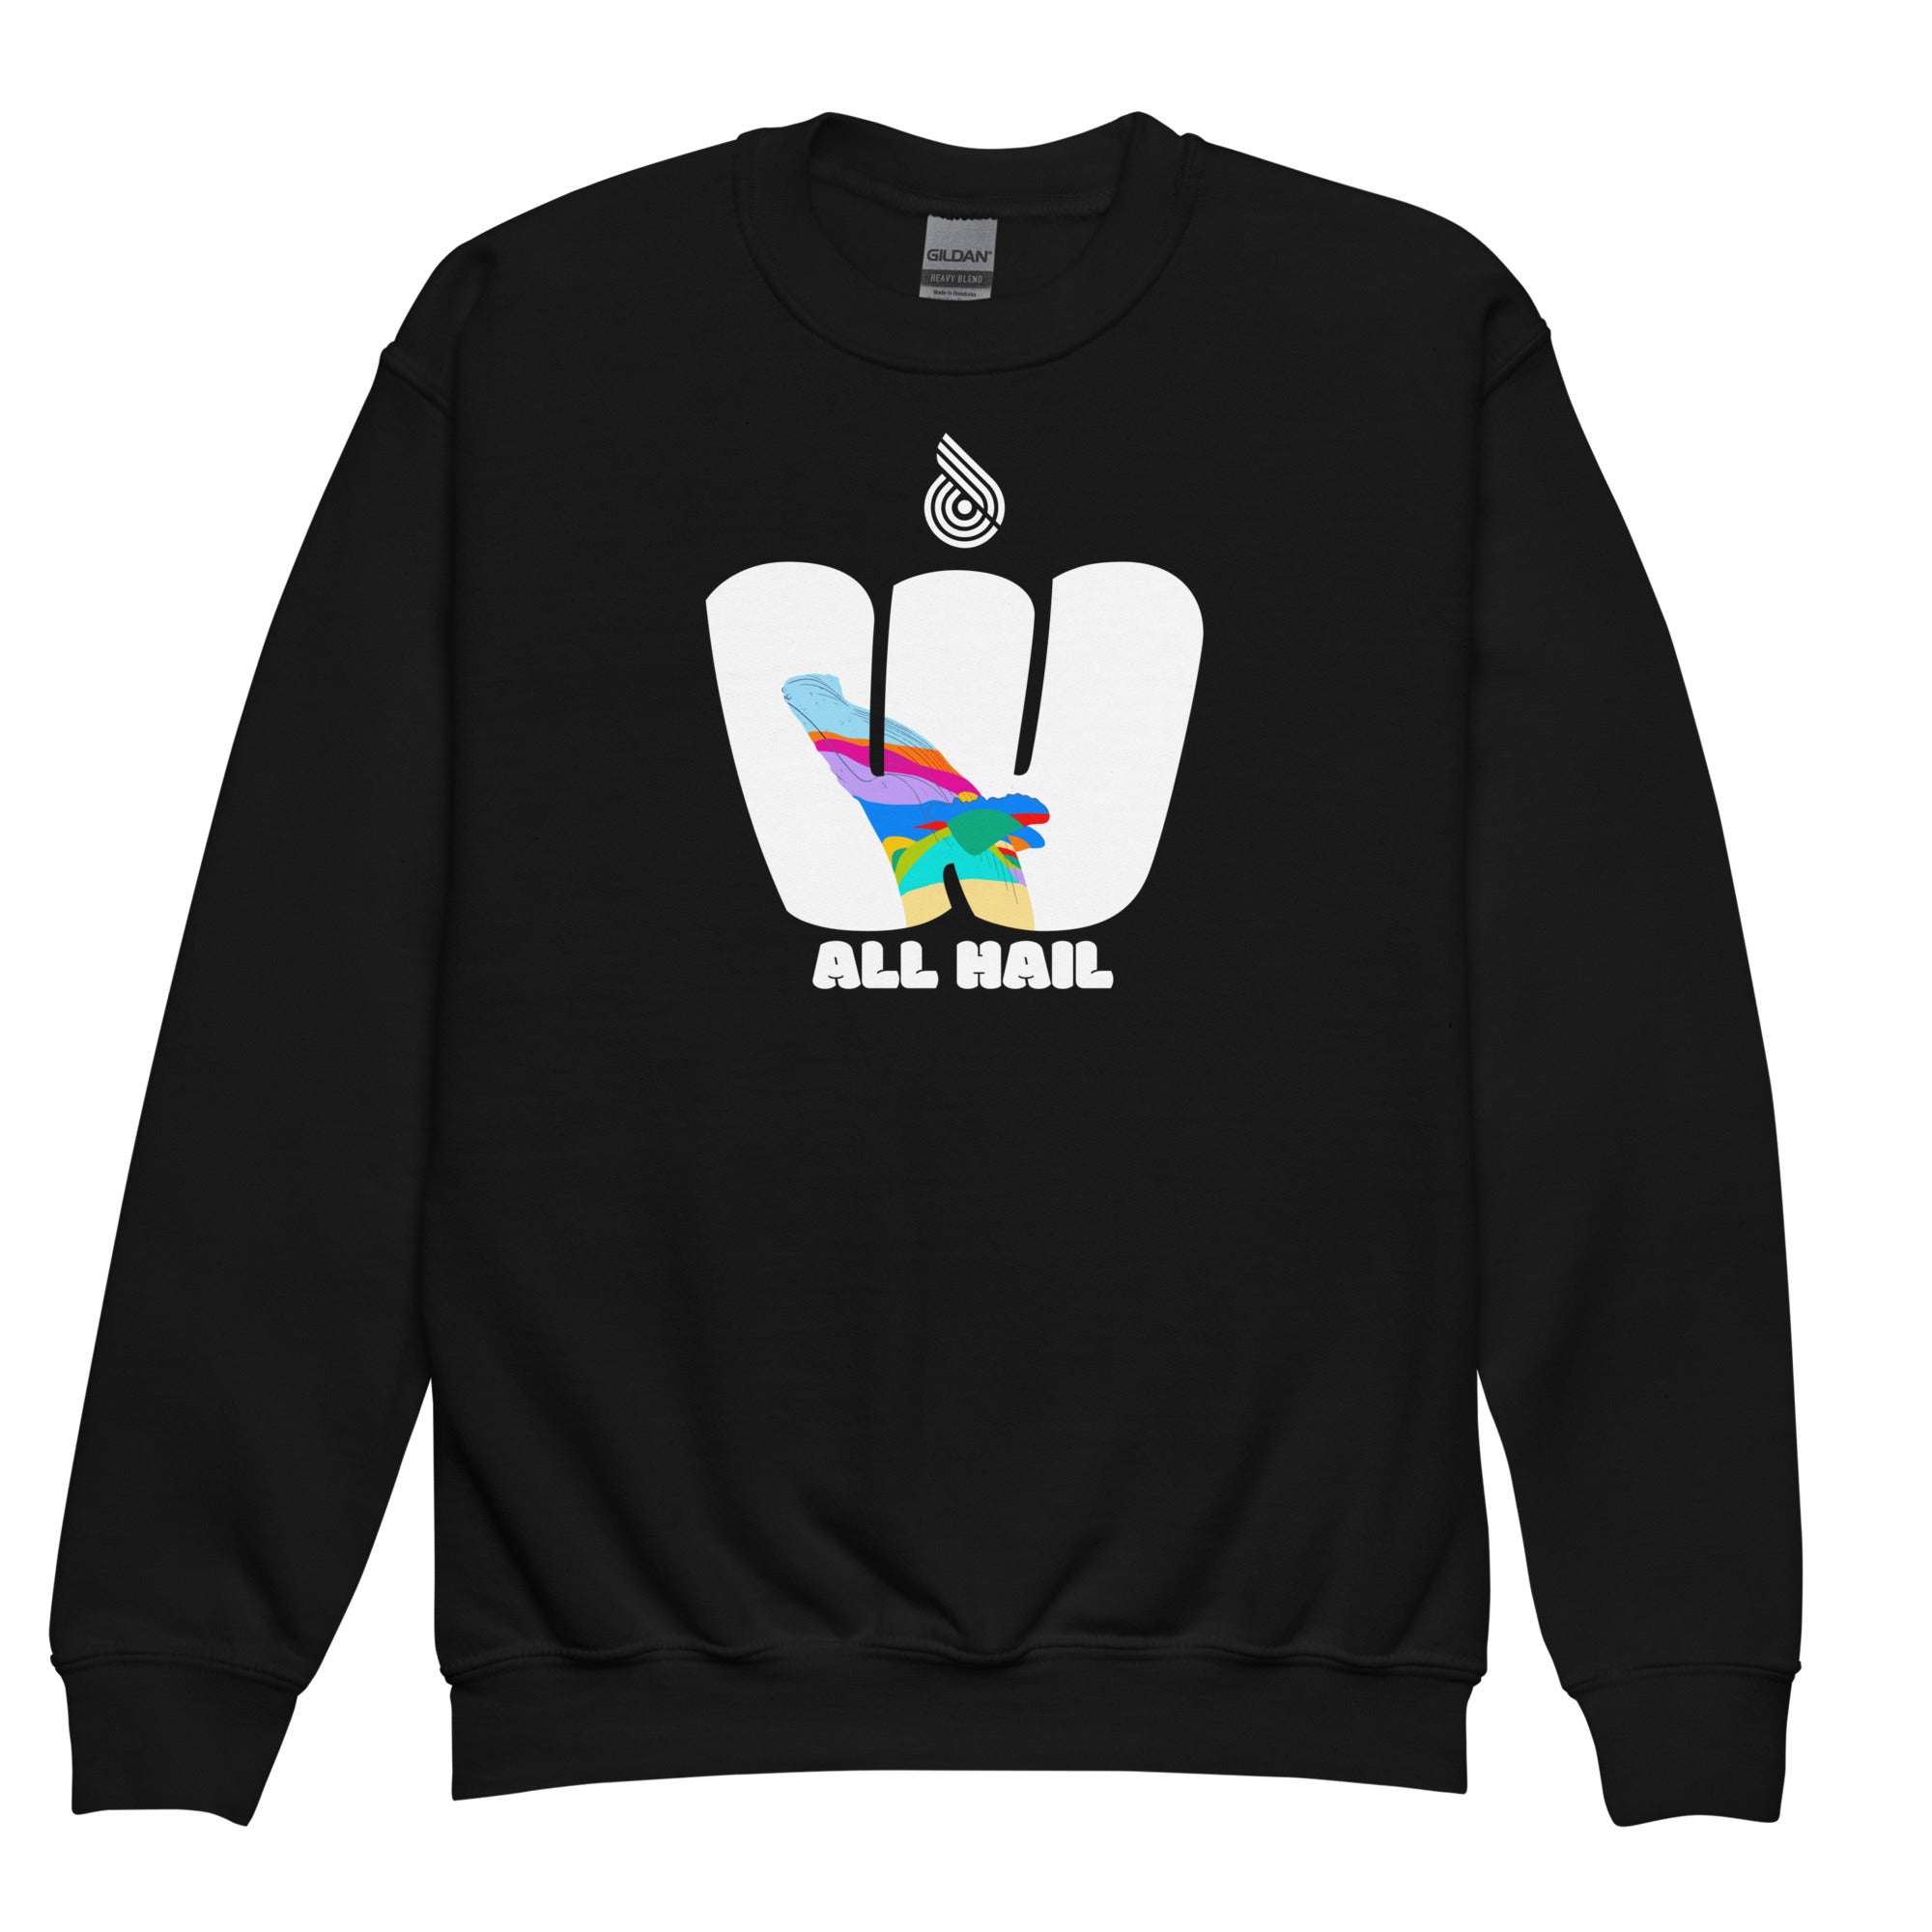 Whalers Youth crewneck sweatshirt